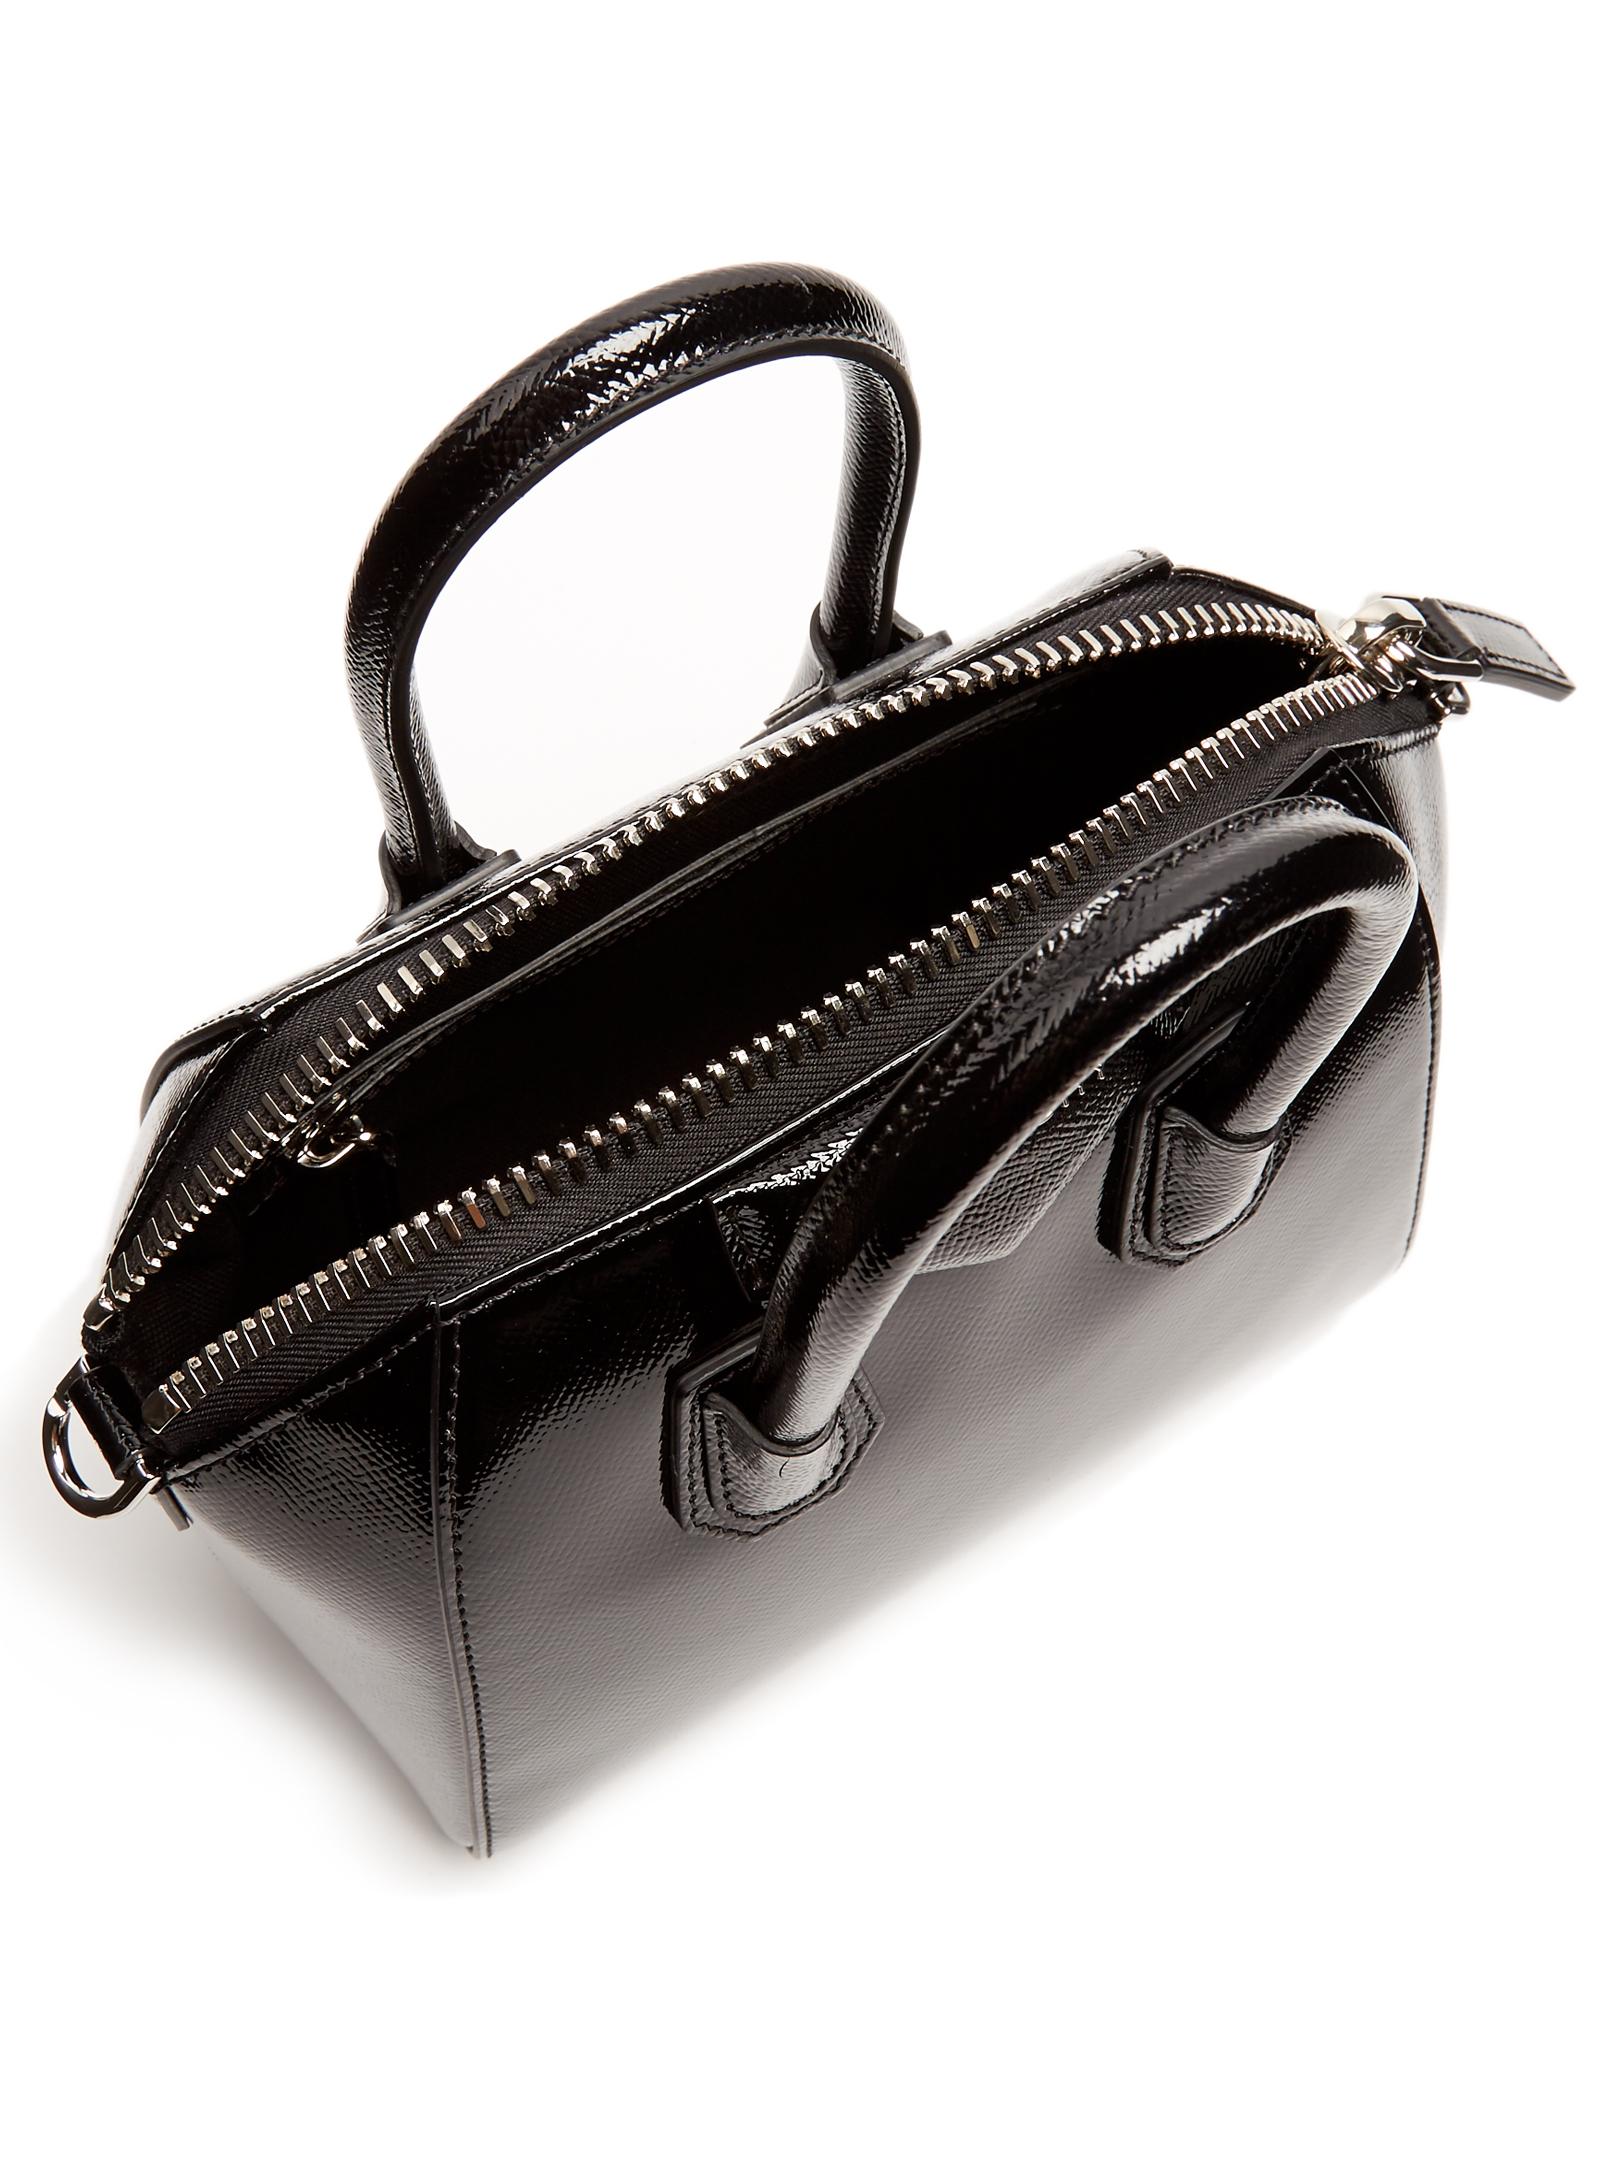 Givenchy Antigona Mini Patent-leather Cross-body Bag in Black - Lyst